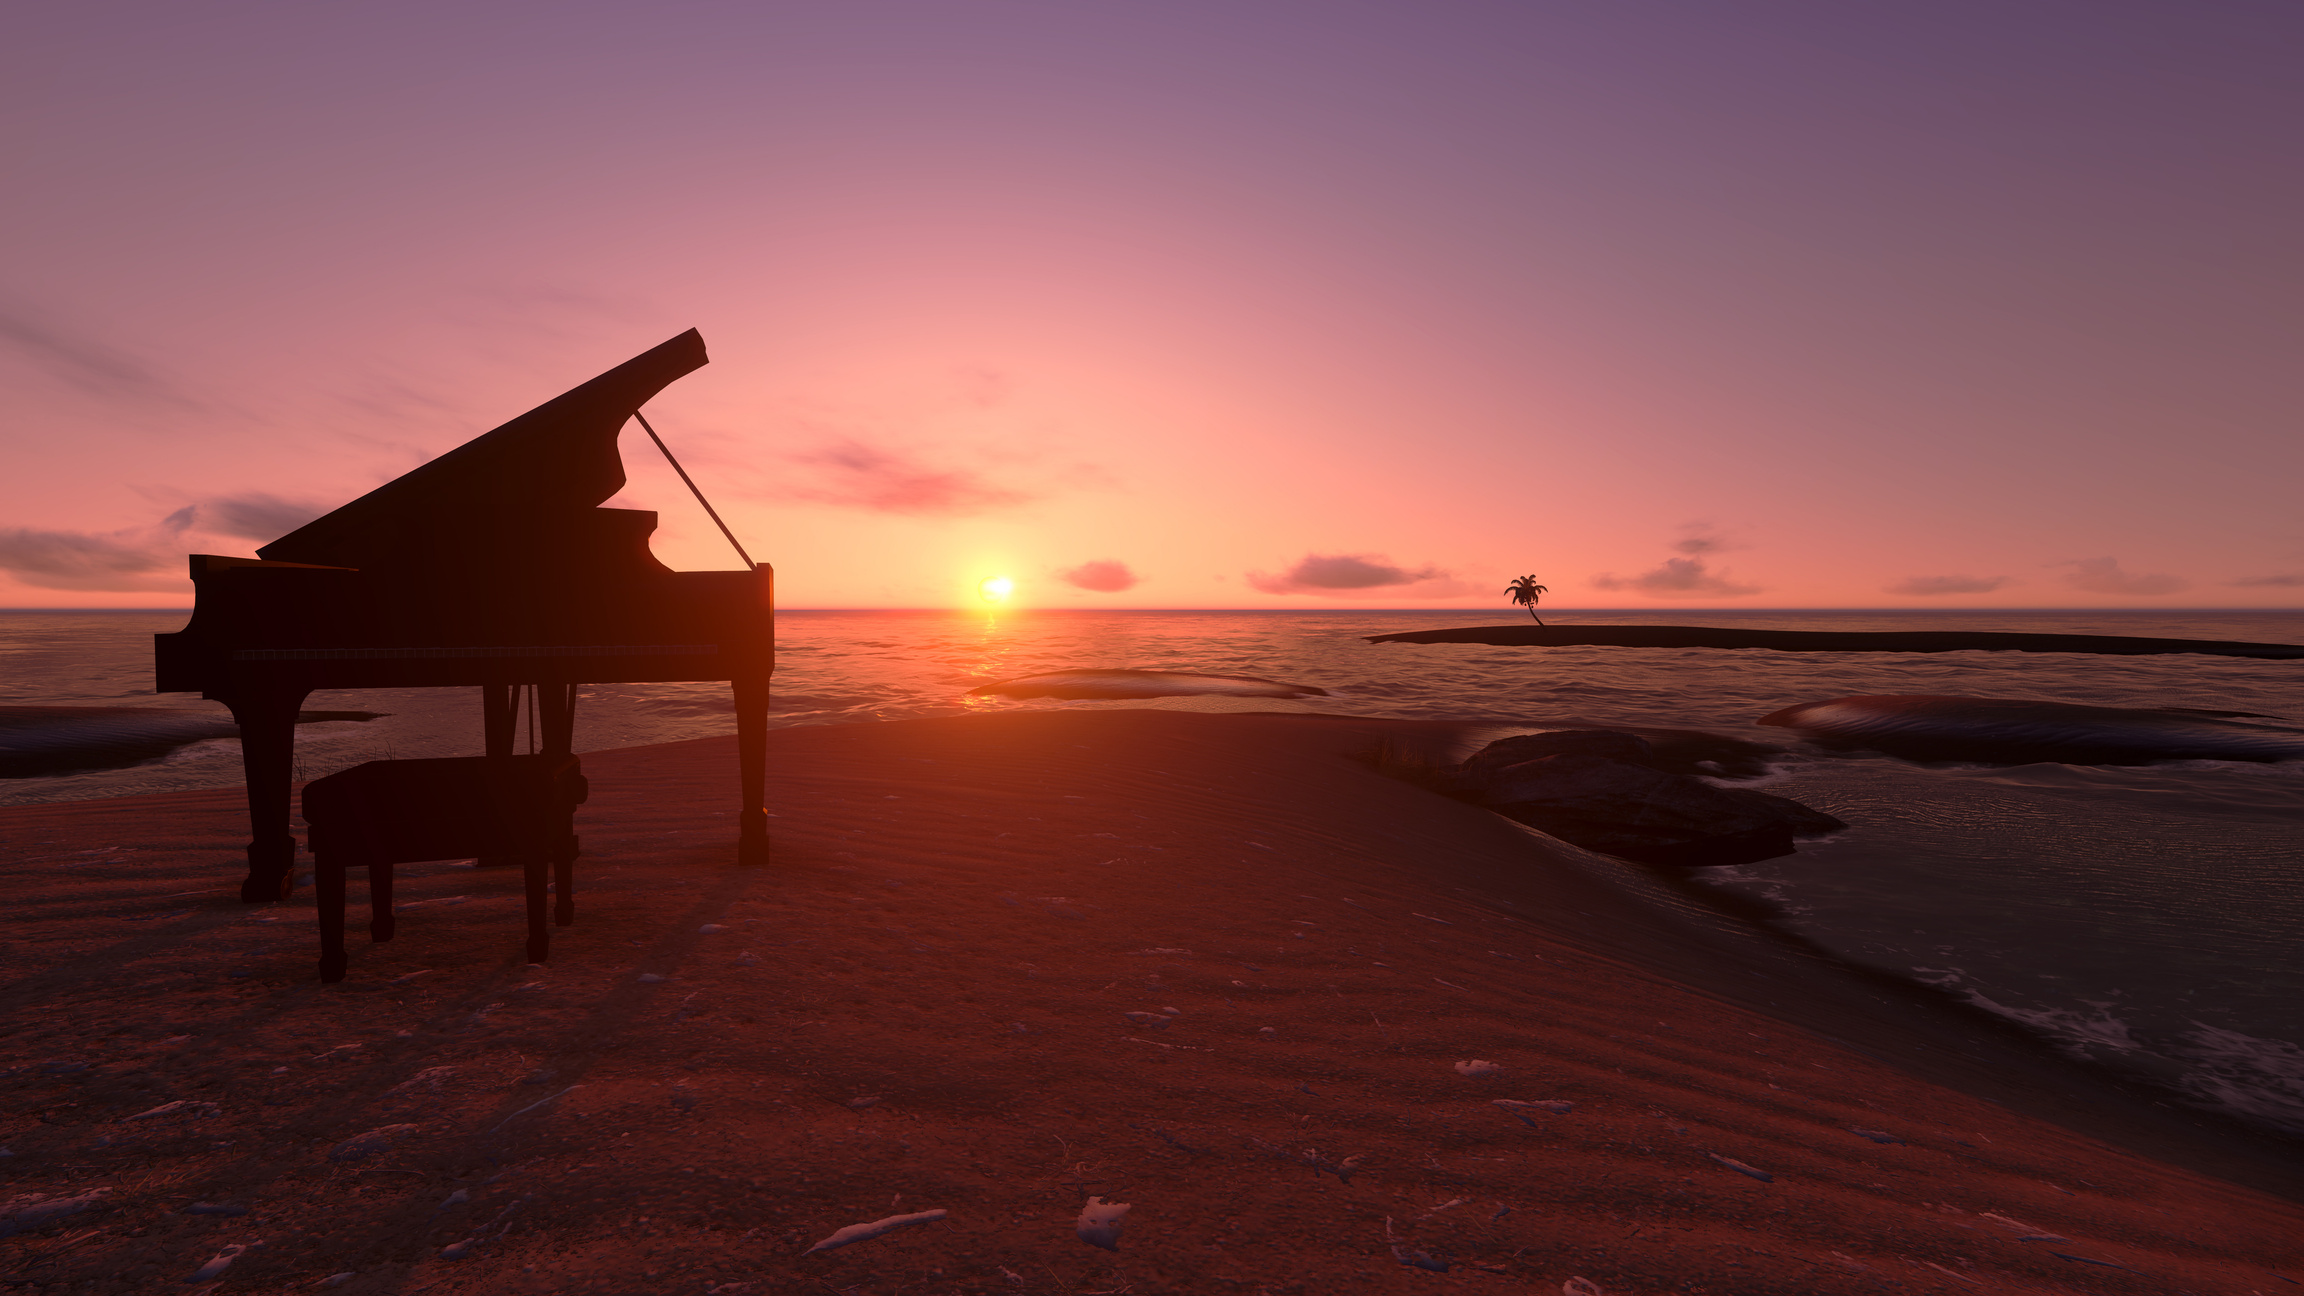 Piano on the beach